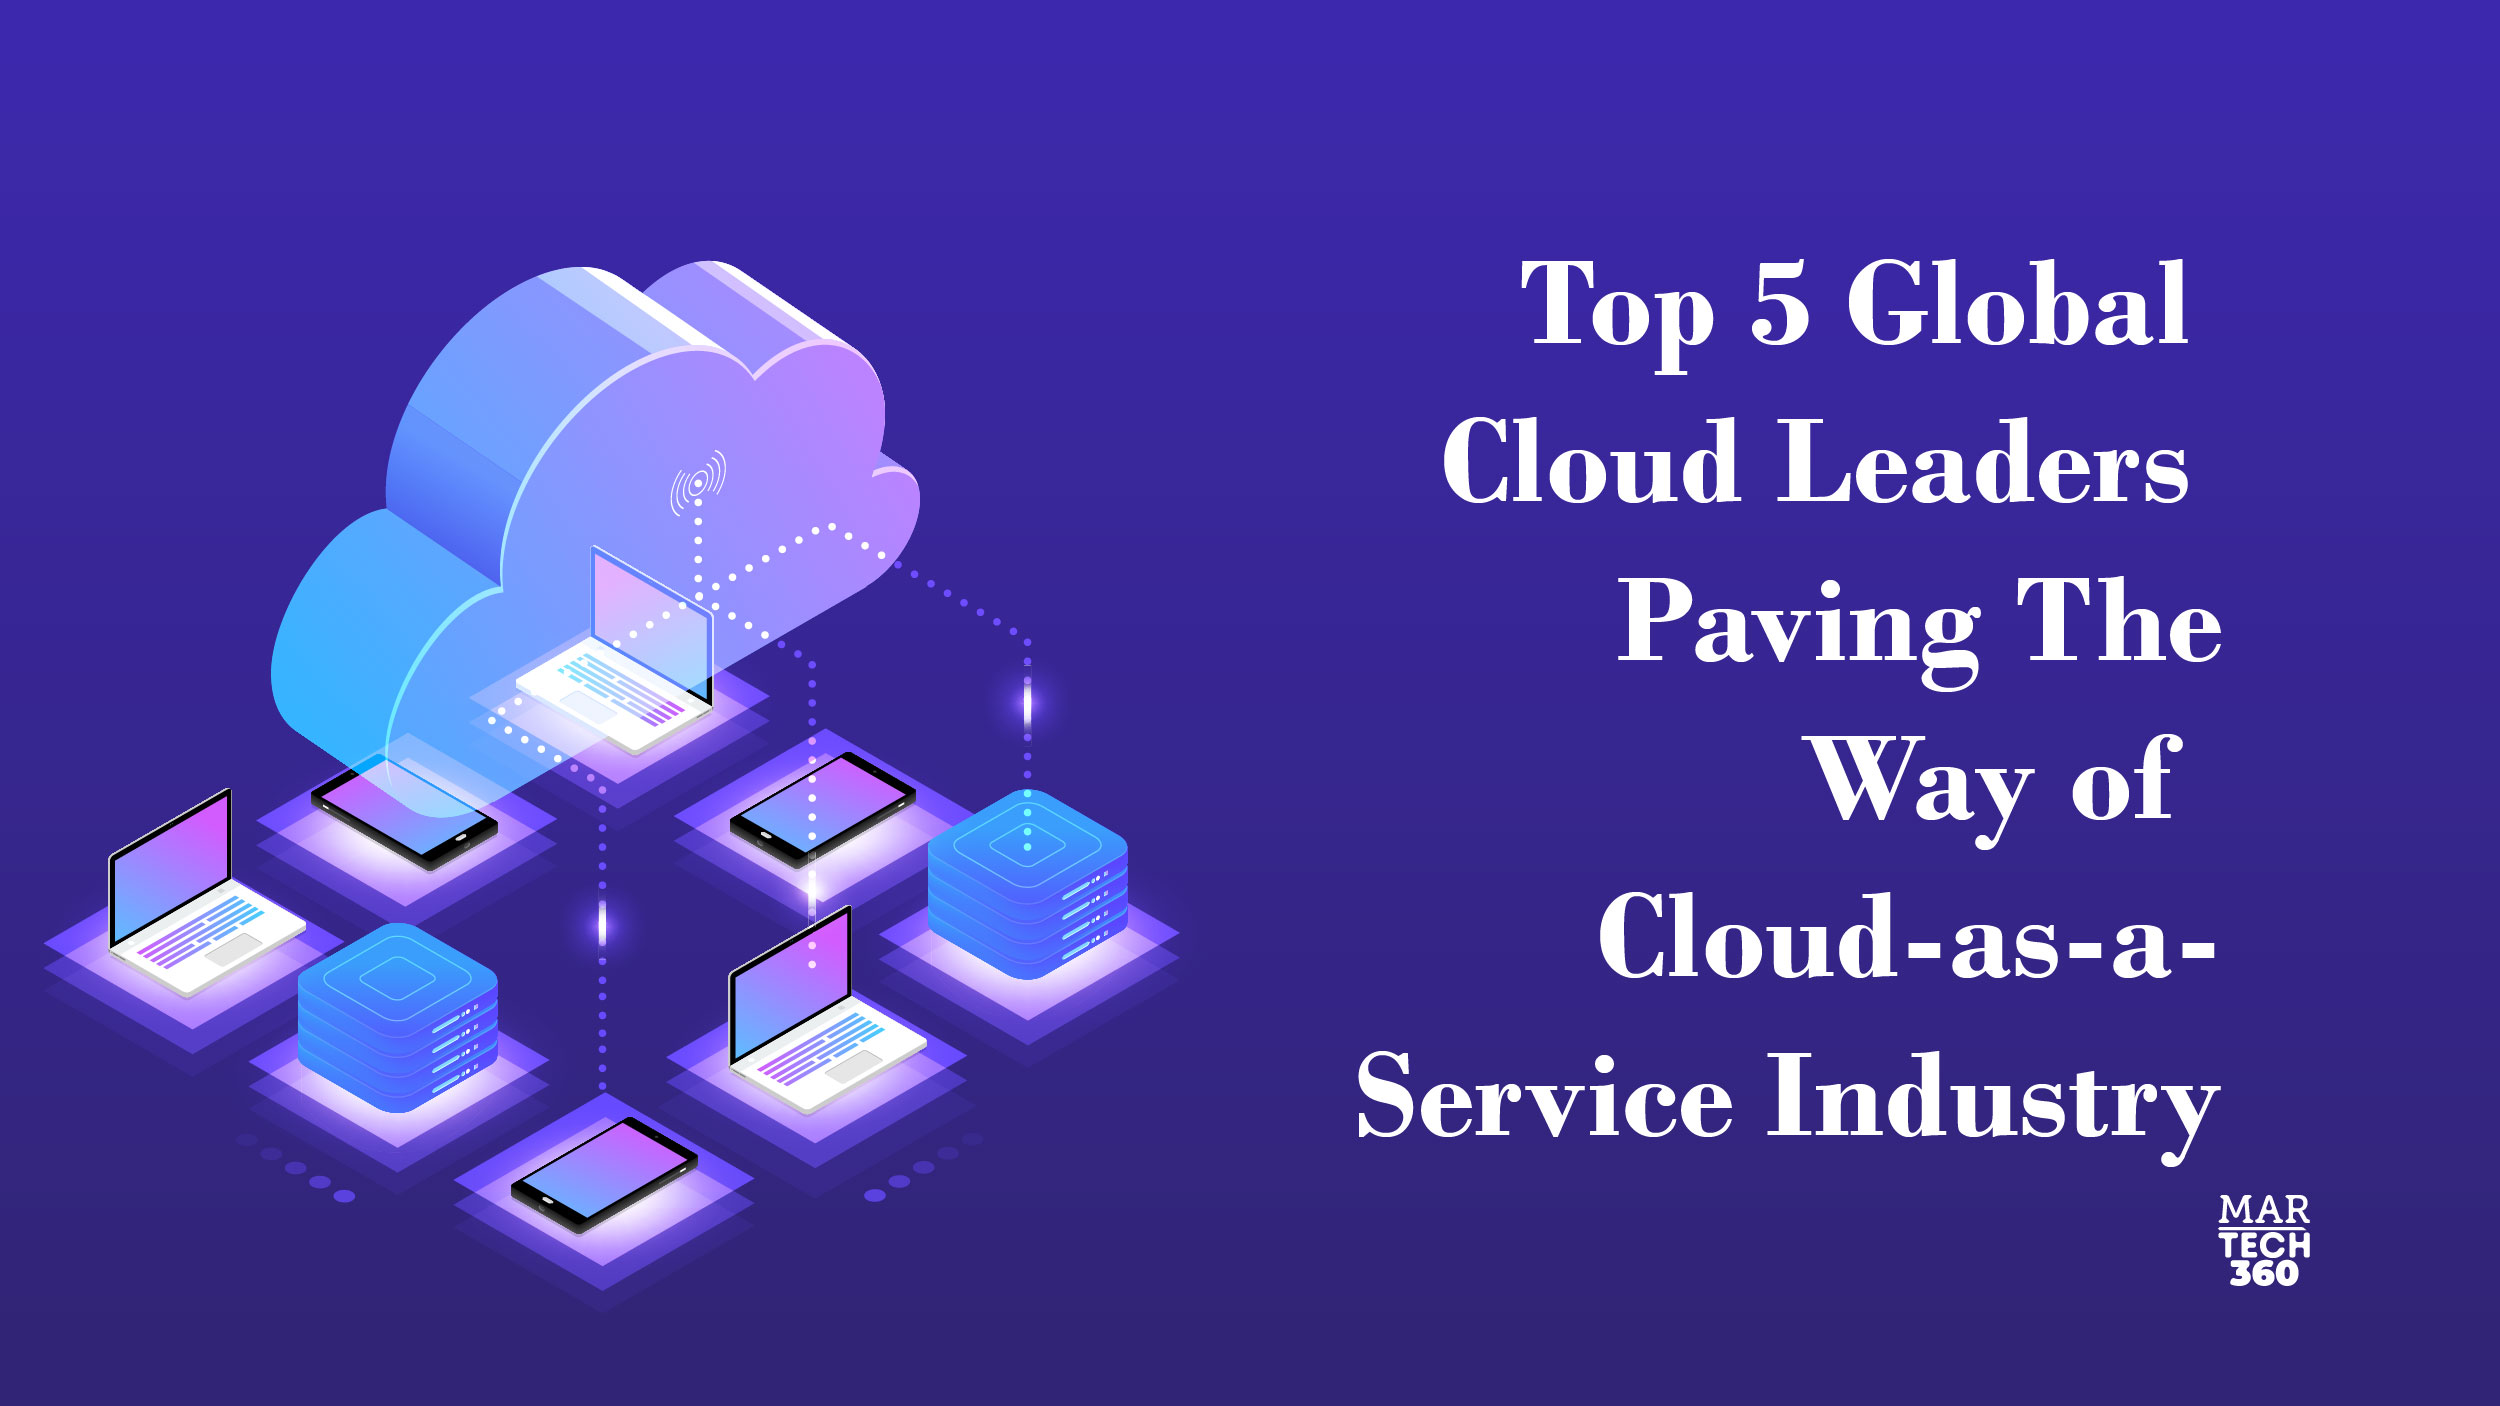 Cloud-as-a-Service